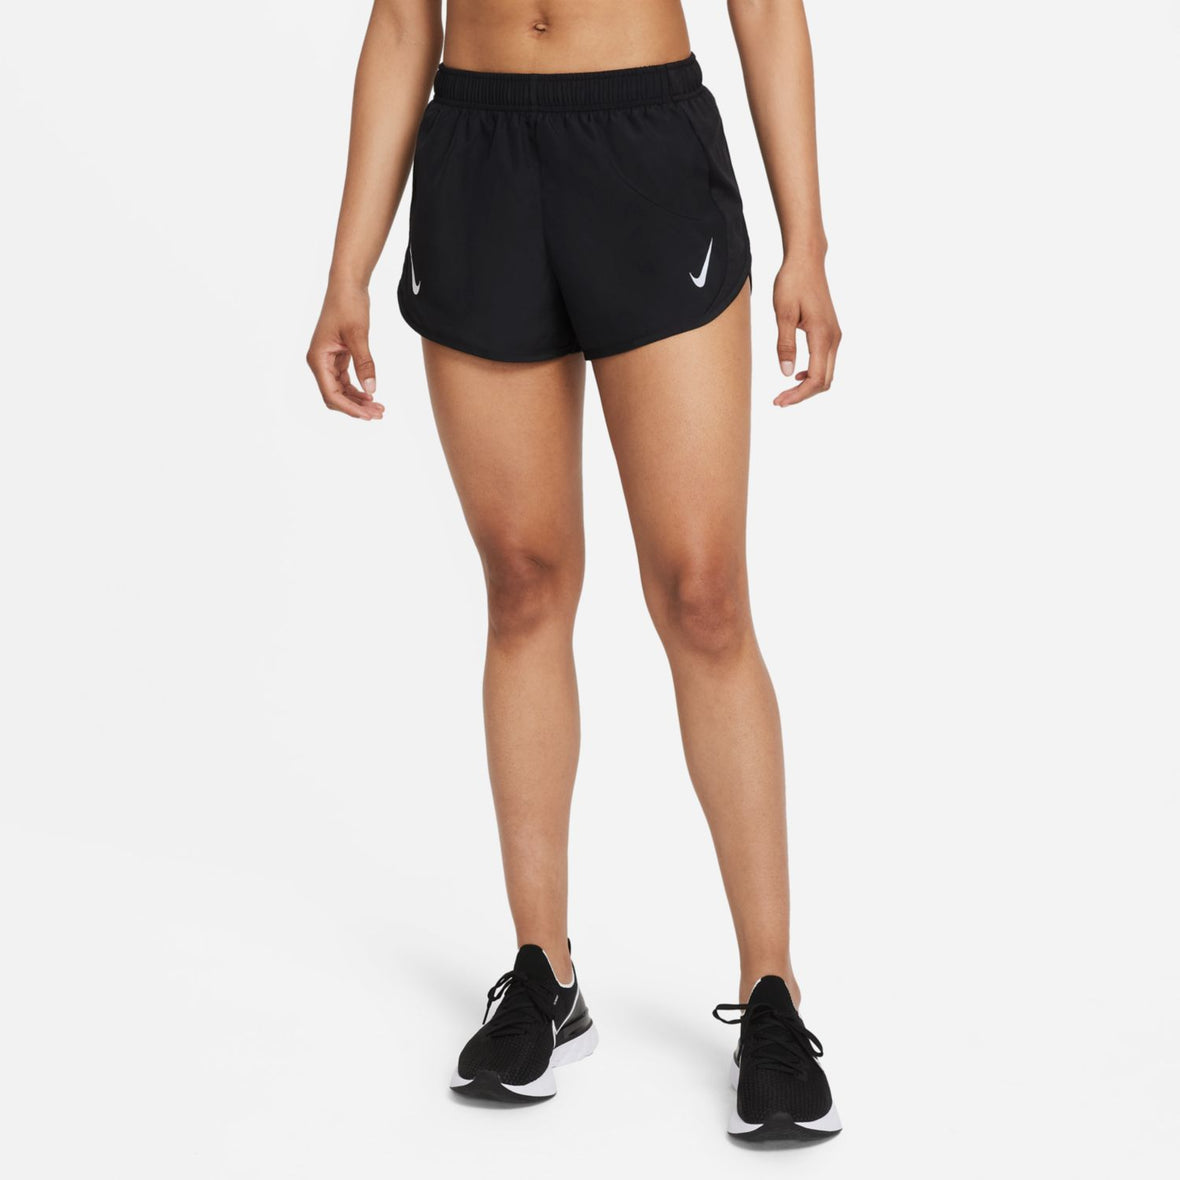 Women's Activewear Shorts | Sonee Sports